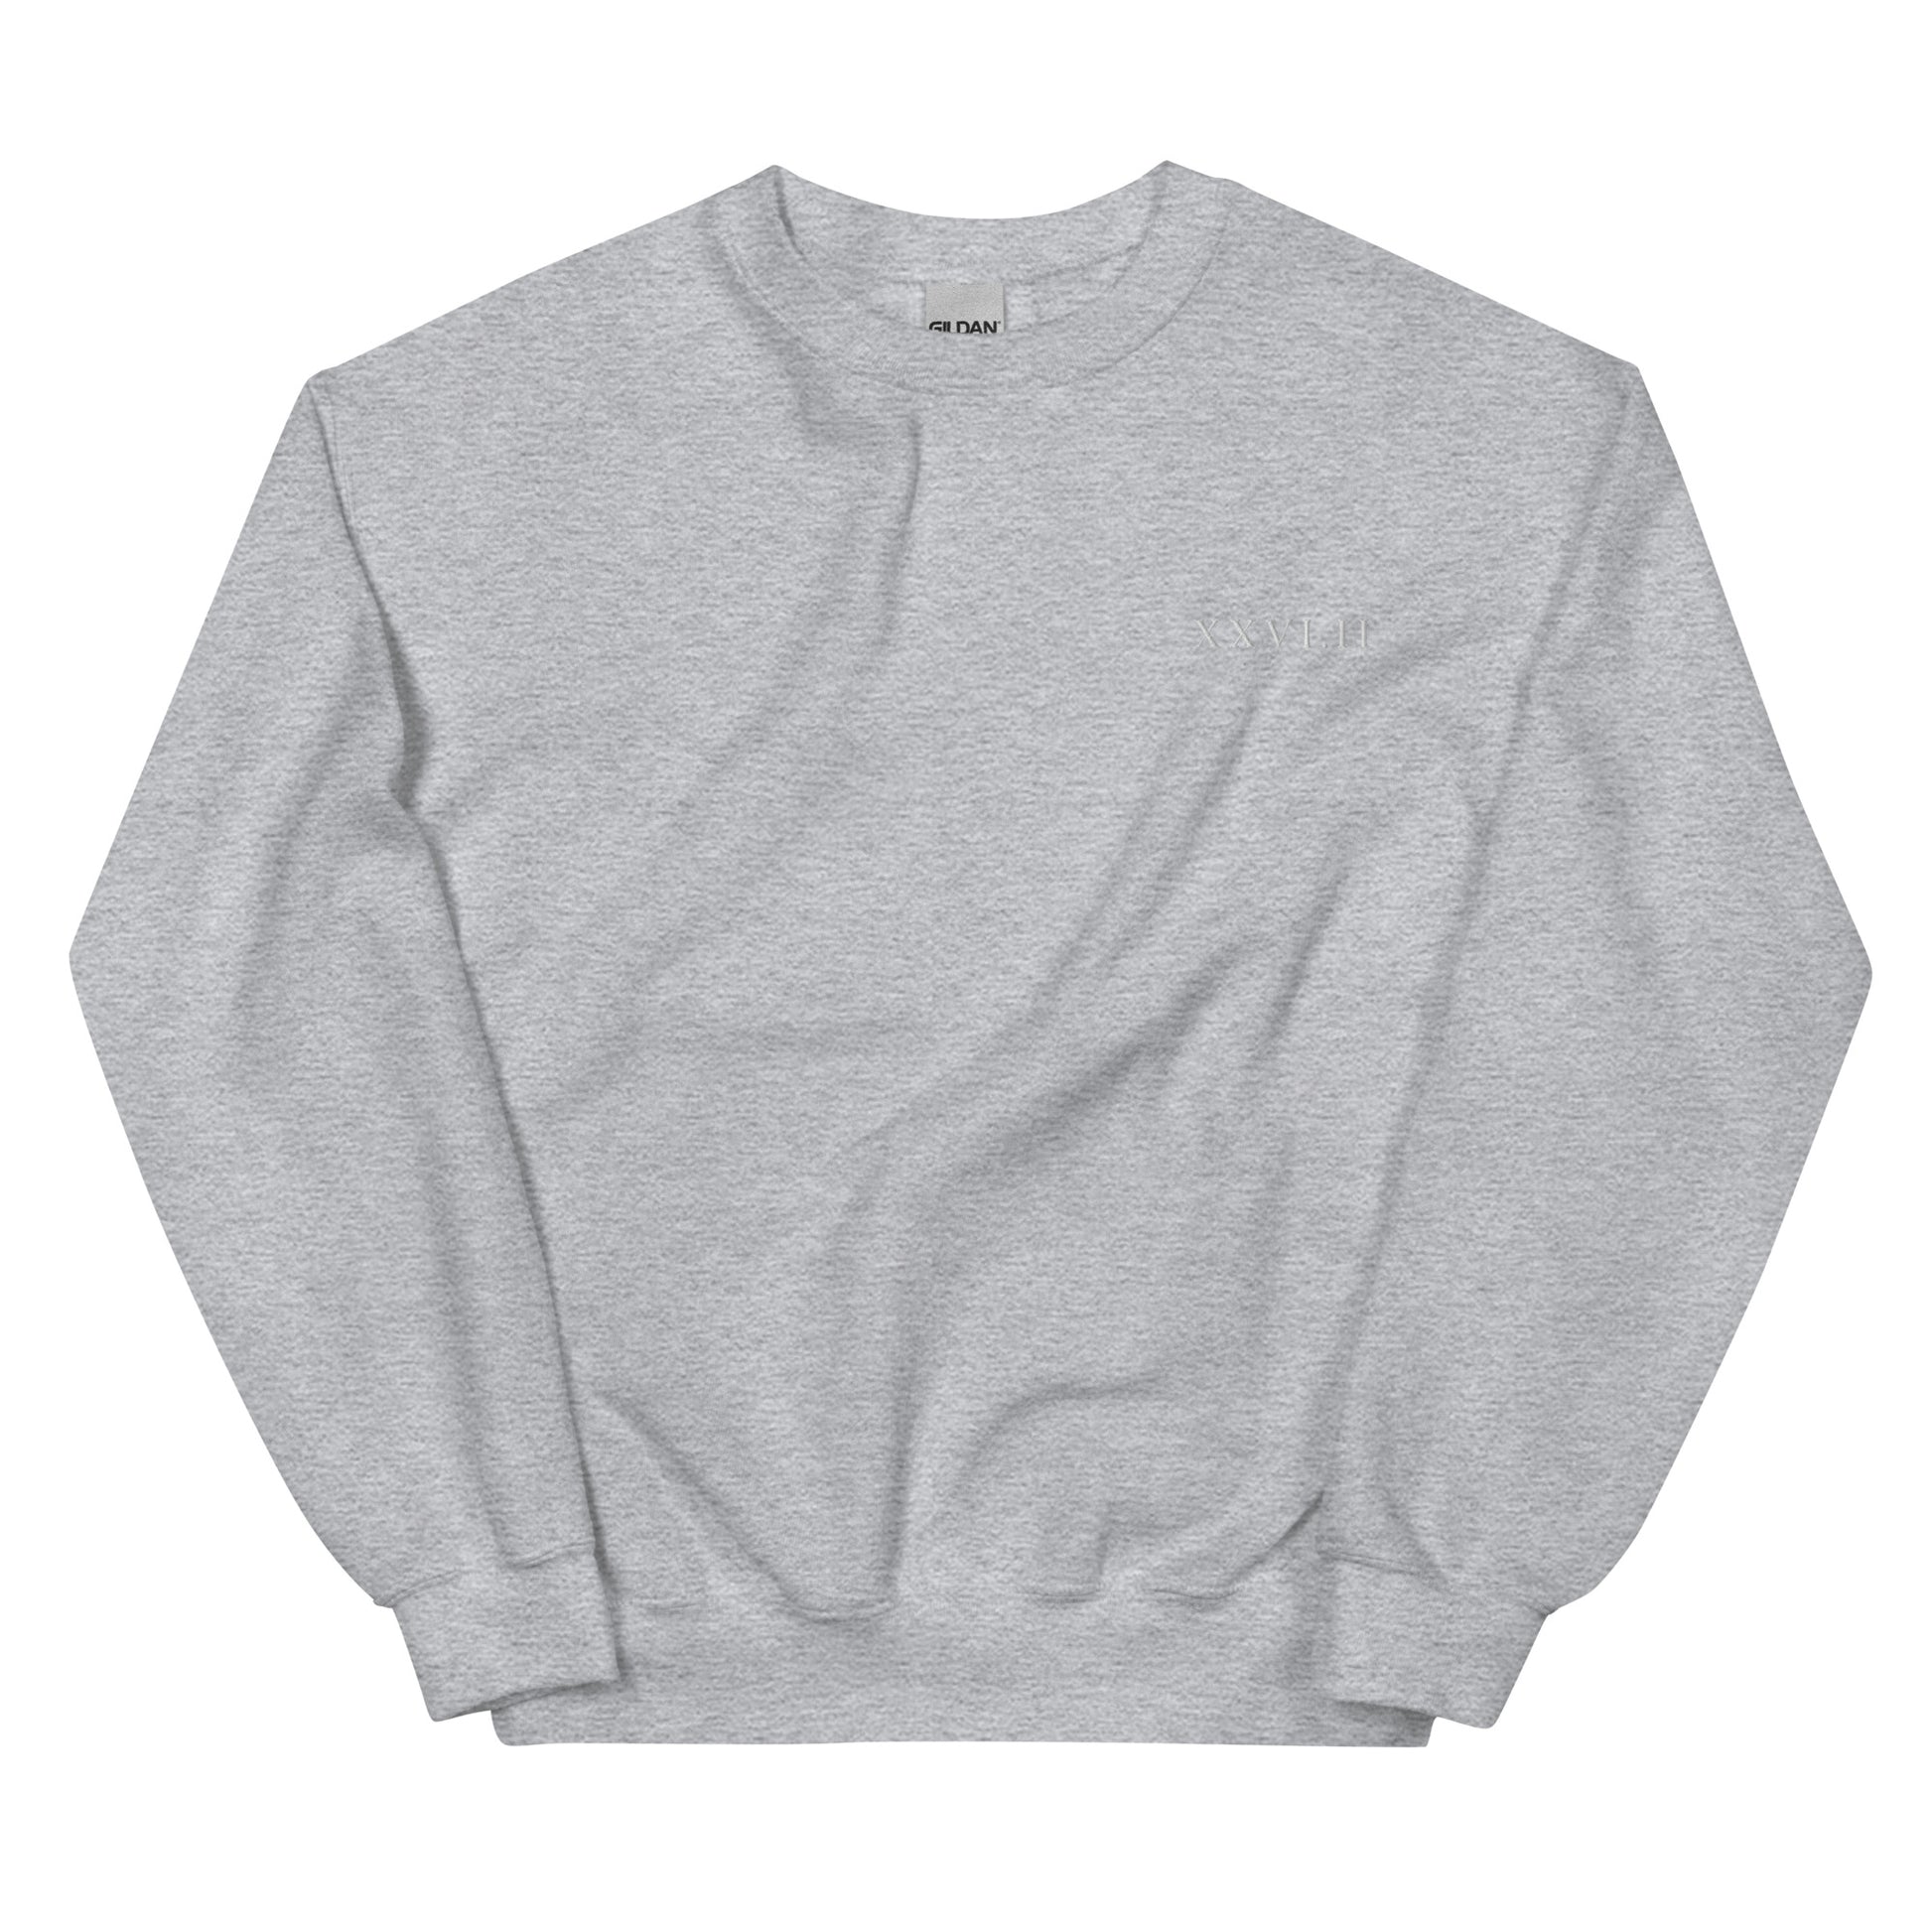 light grey sweatshirt with xxvi.ii 26.2 marathon distance in roman numerals on the left breast